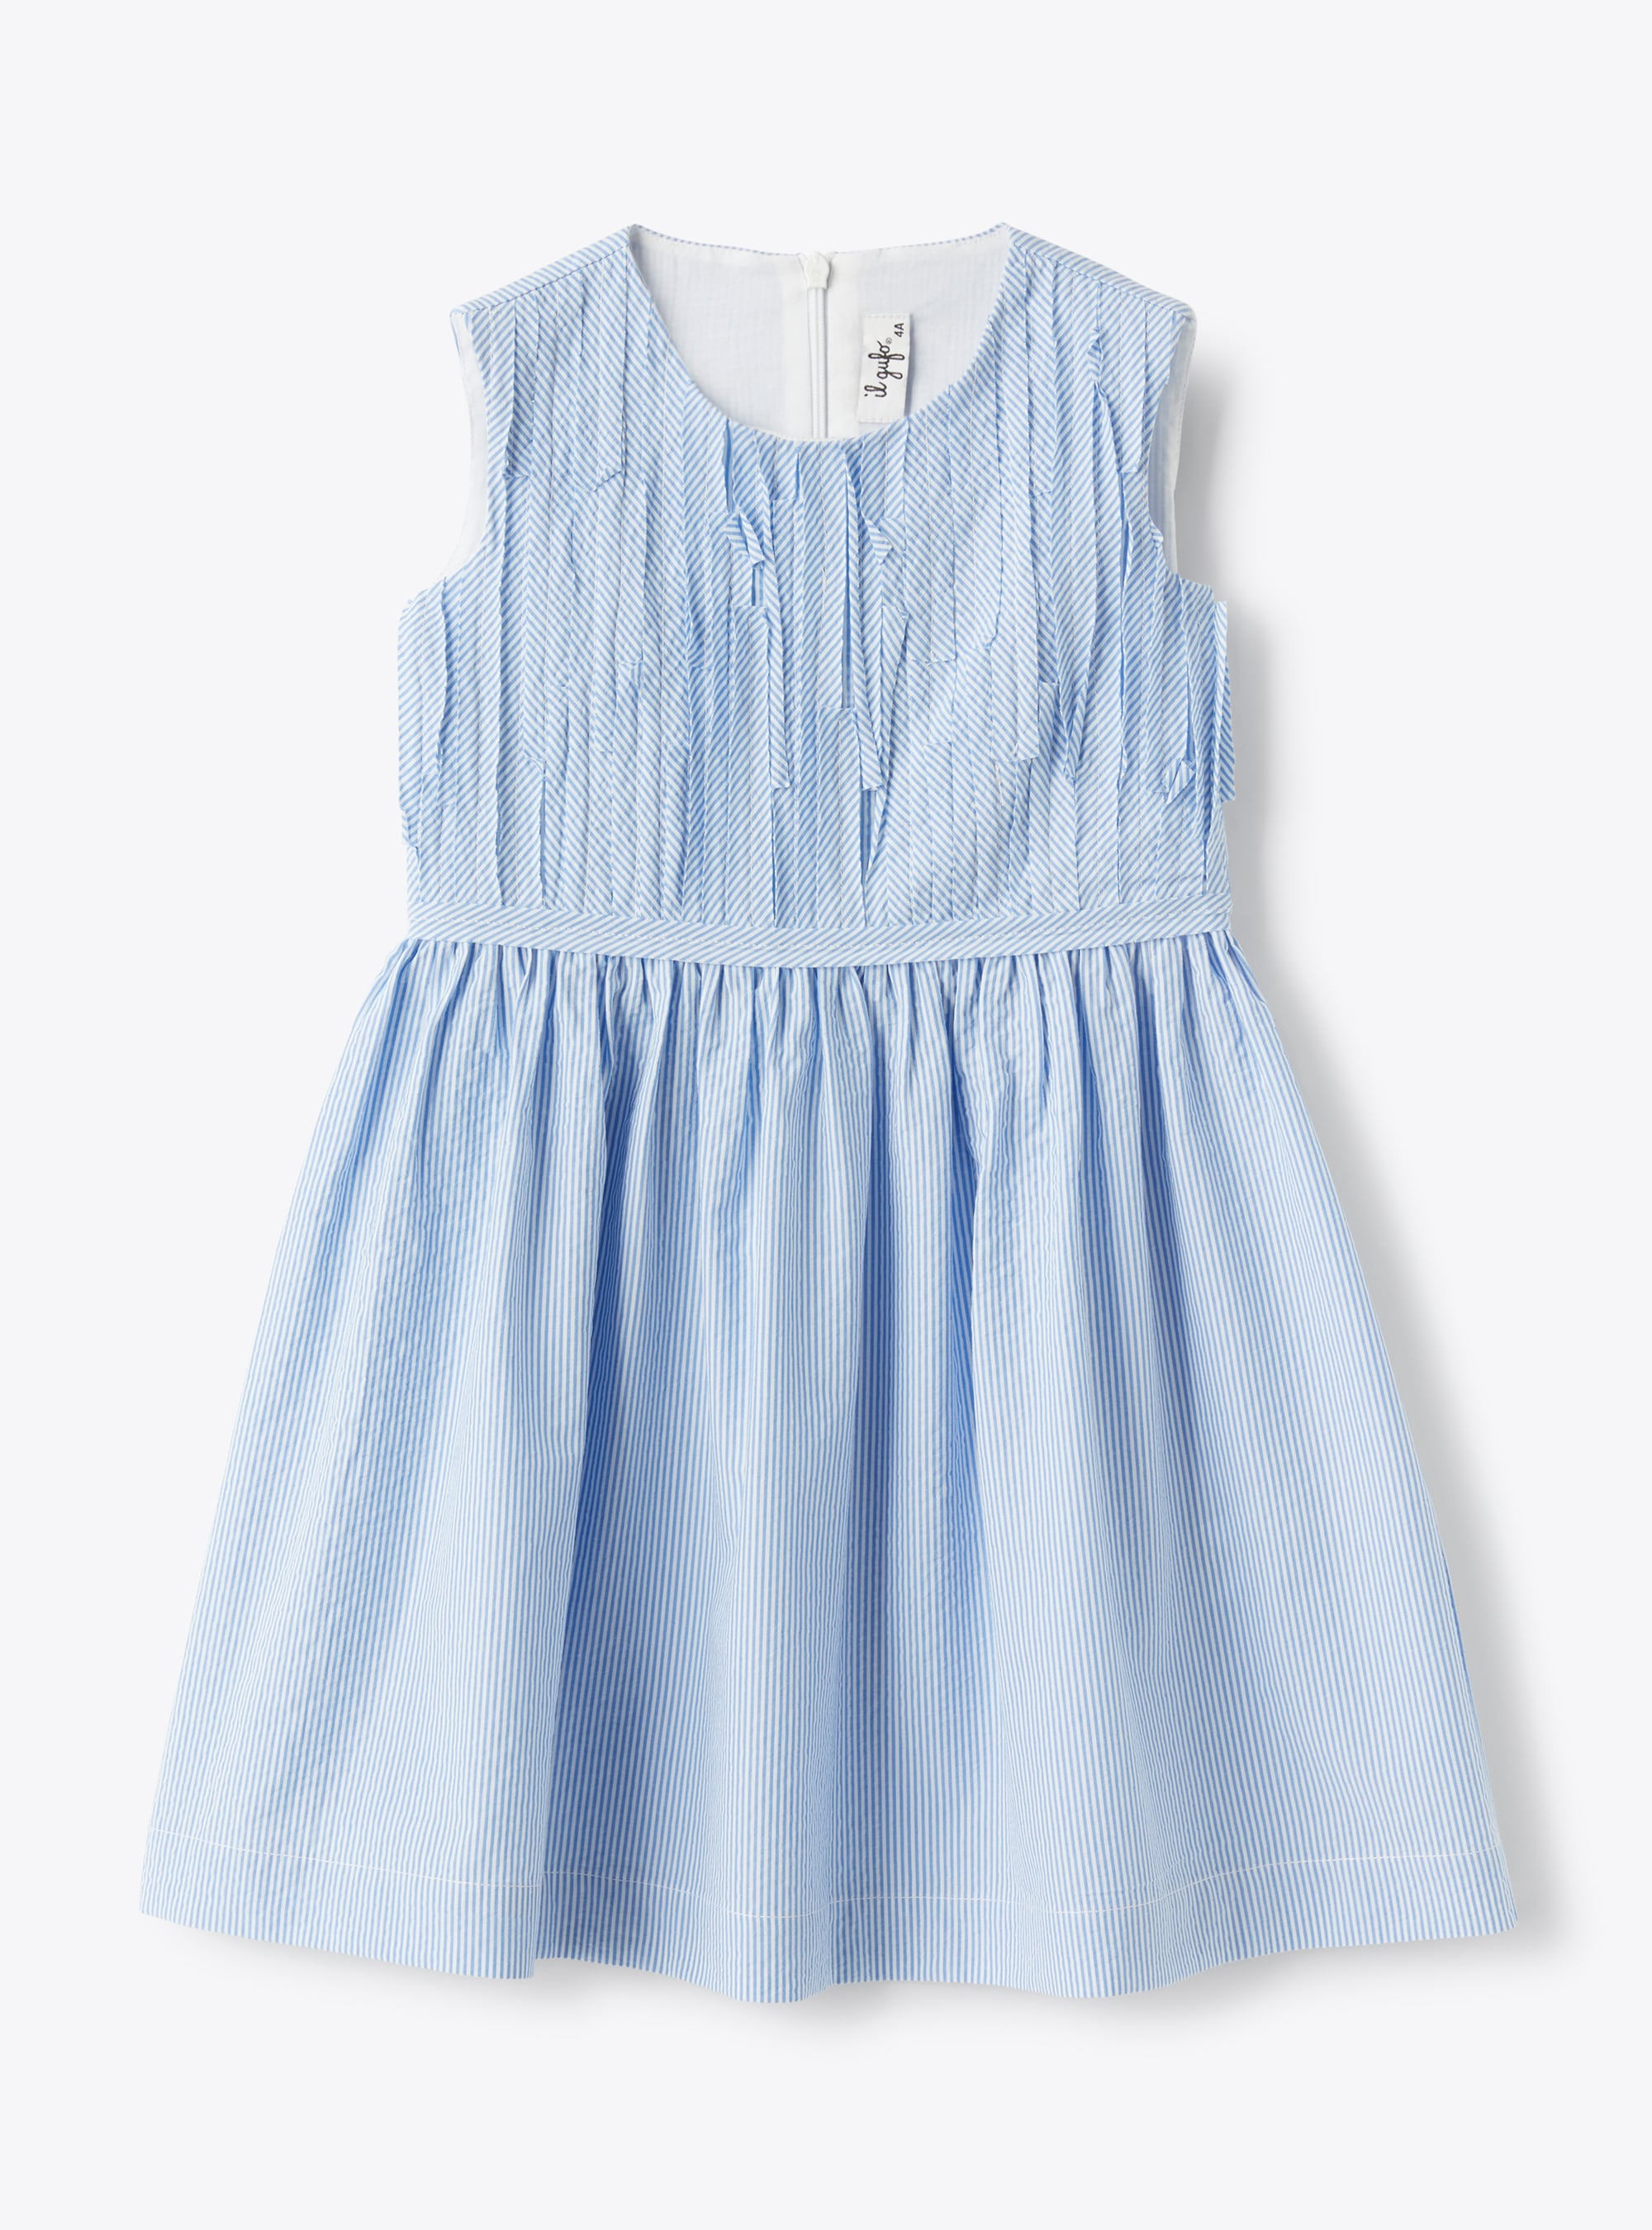 Sleeveless dress in blue-&-white-striped seersucker - Brown | Il Gufo